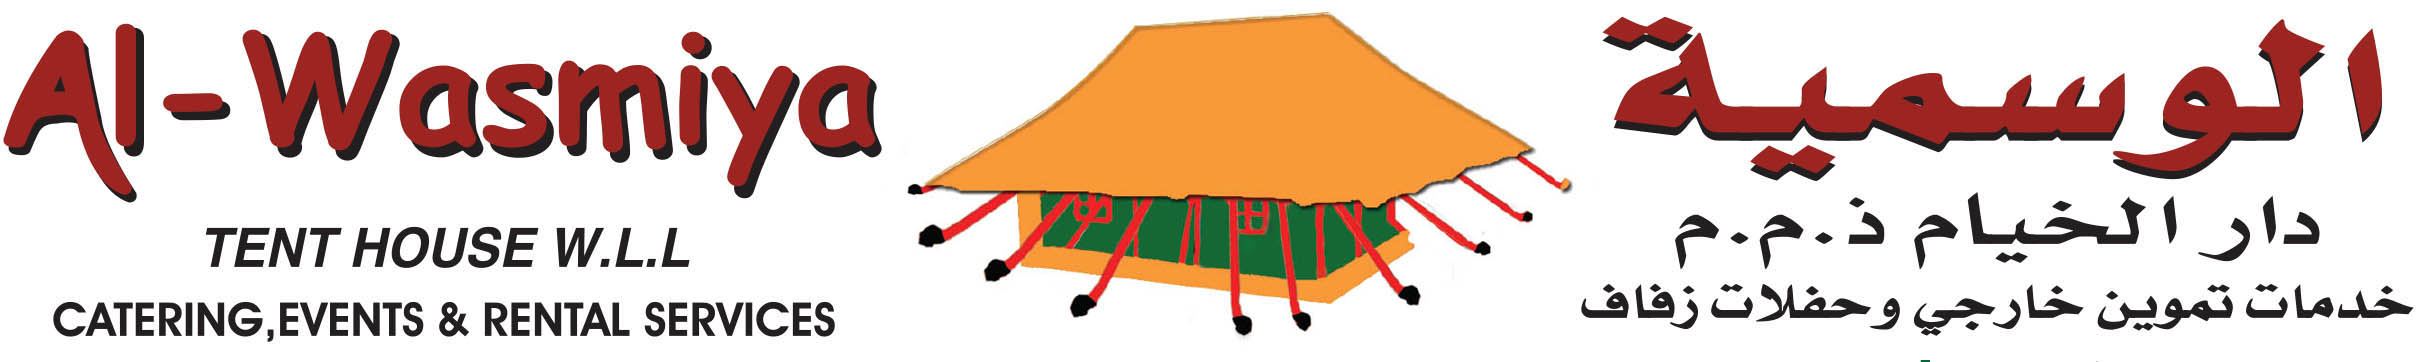 Al Wasmiya Tent House W.L.L